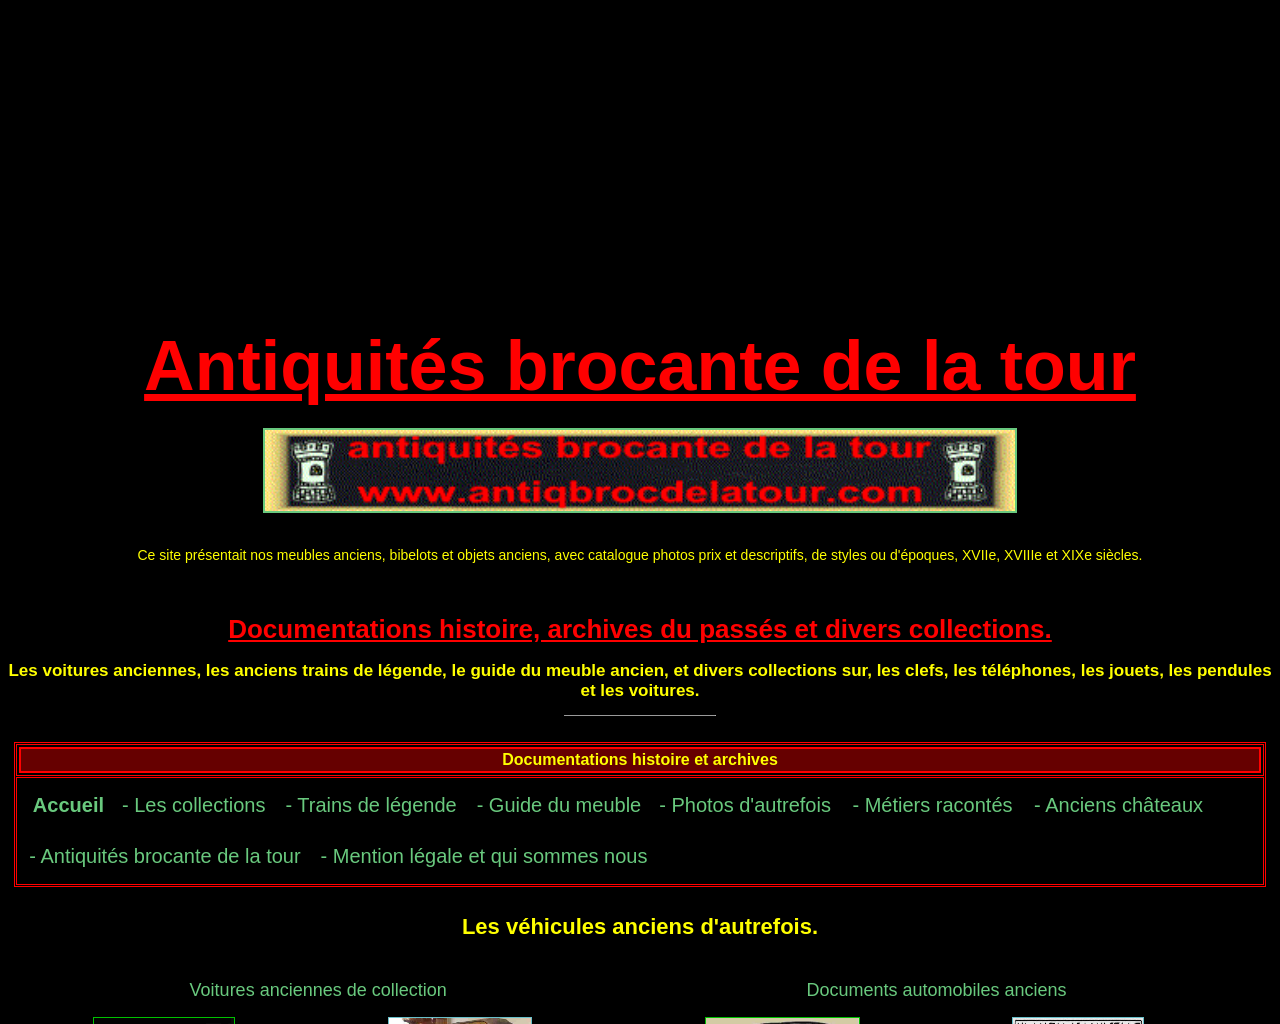 www.antiqbrocdelatour.com